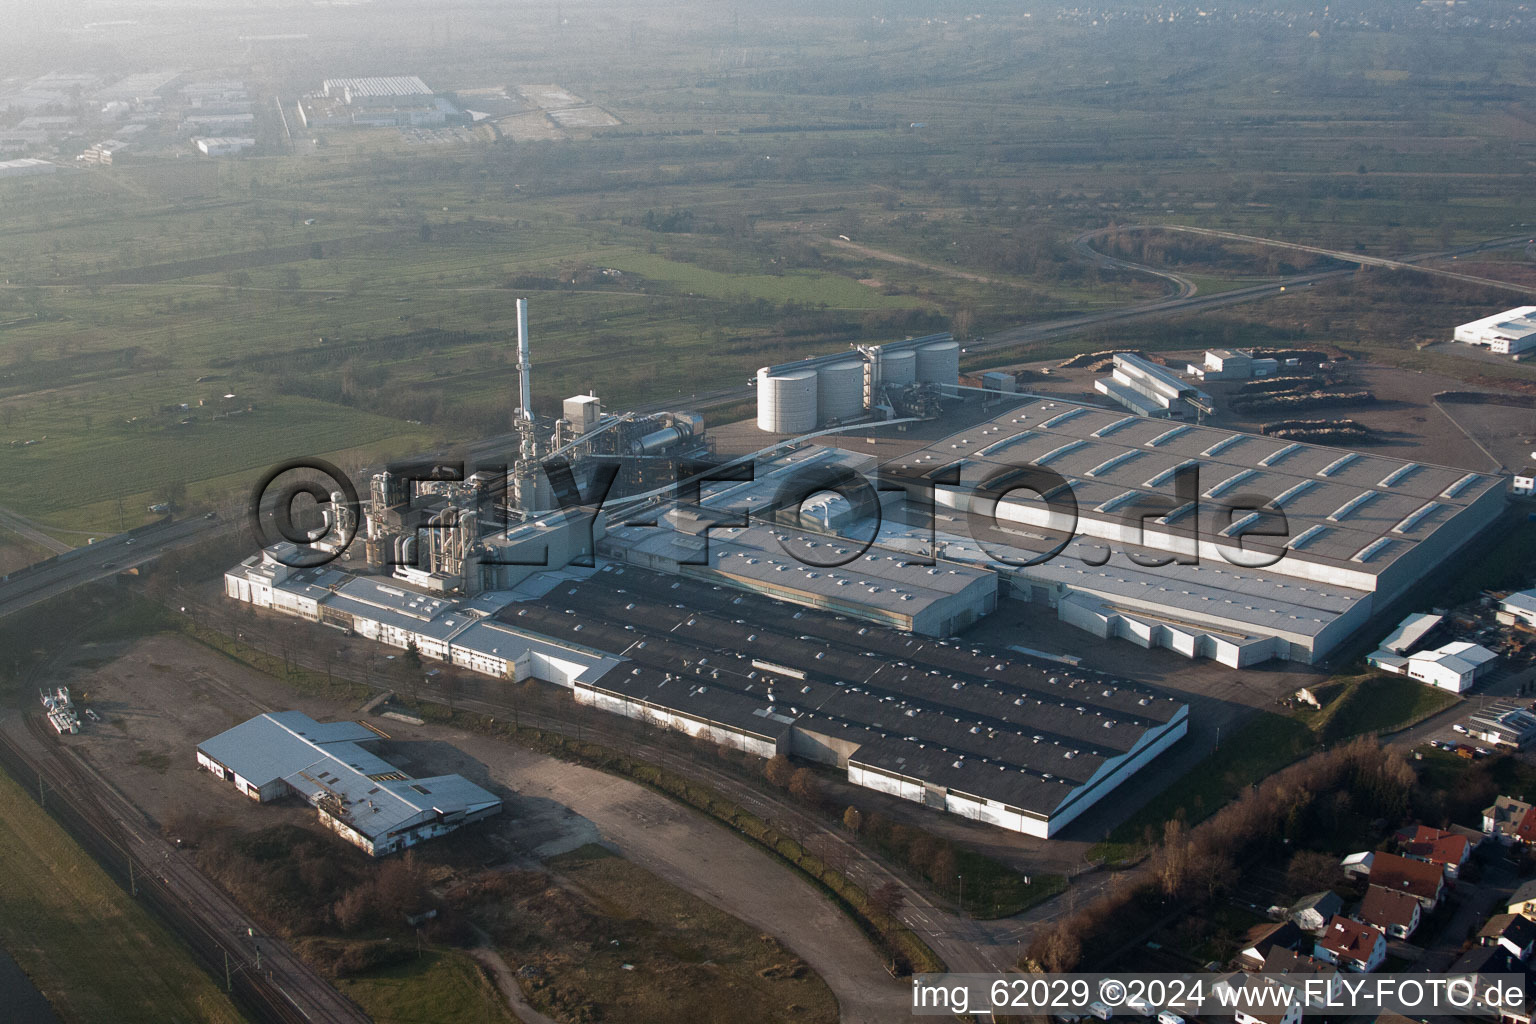 Technical facilities in the industrial area Spanplattenwerk in Bischweier in the state Baden-Wurttemberg